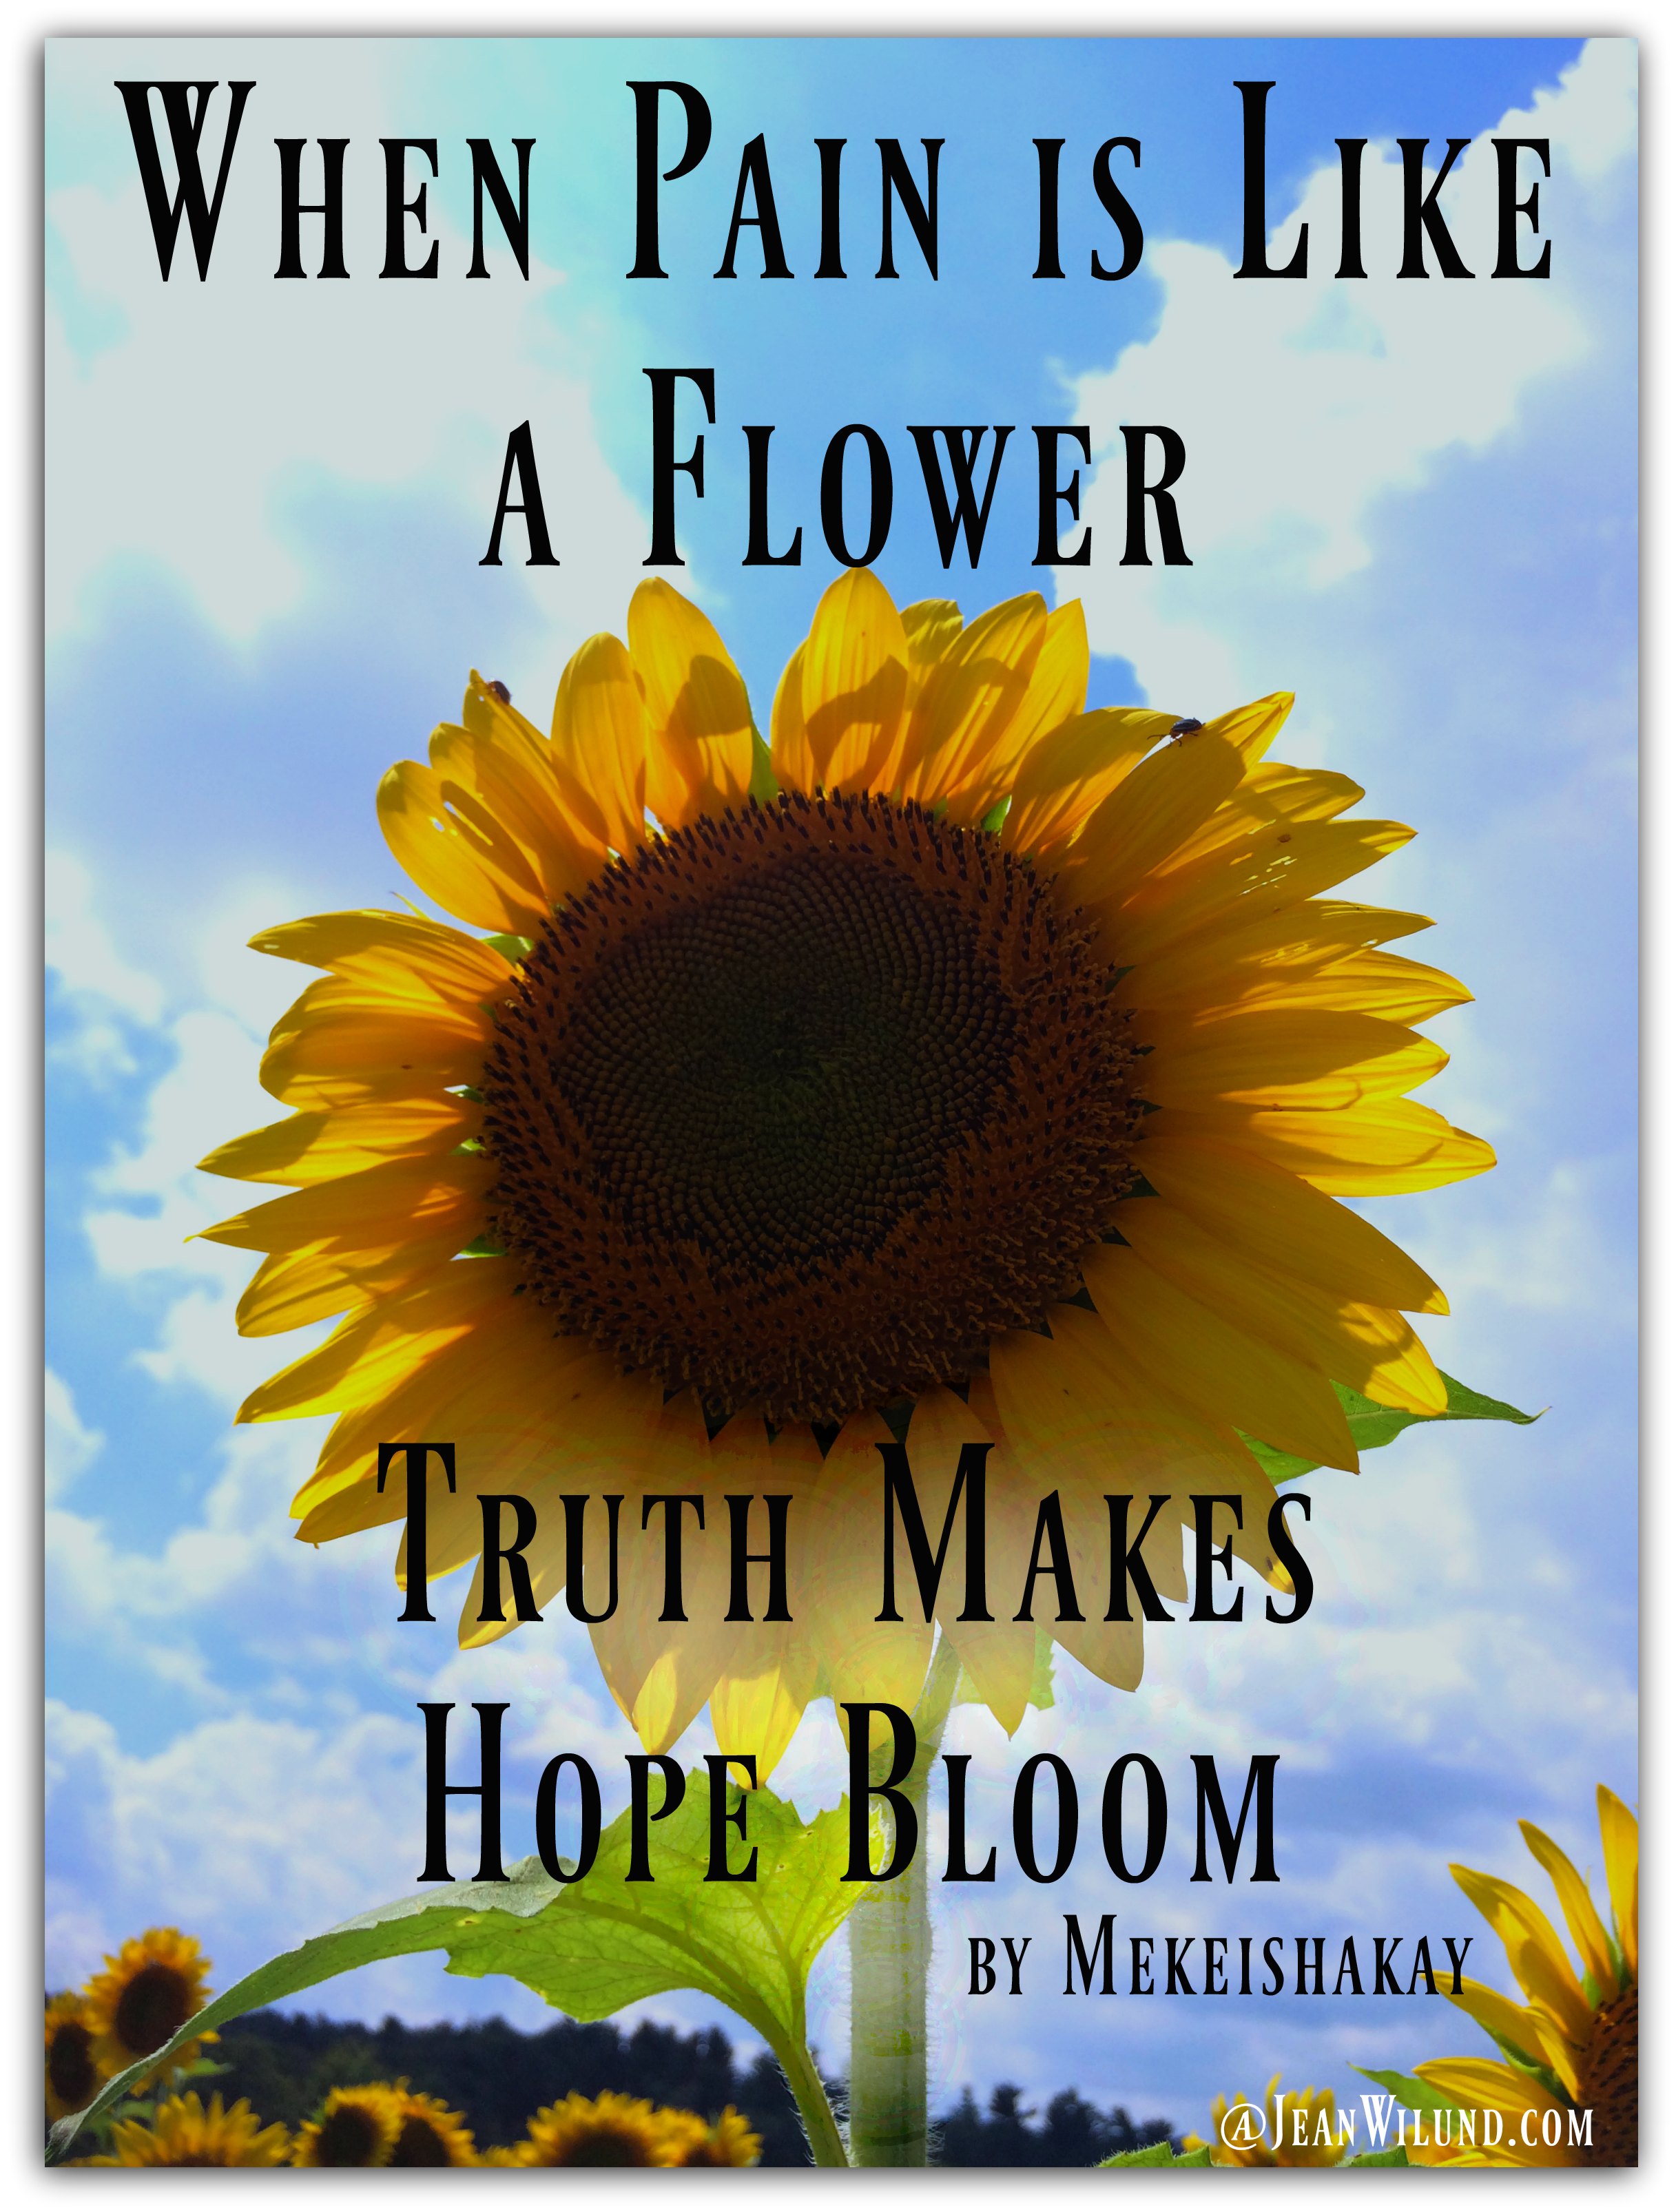 When Pain is Like a Flower, Truth Makes Hope Bloom by Mekeishakay via www.JeanWilund.com